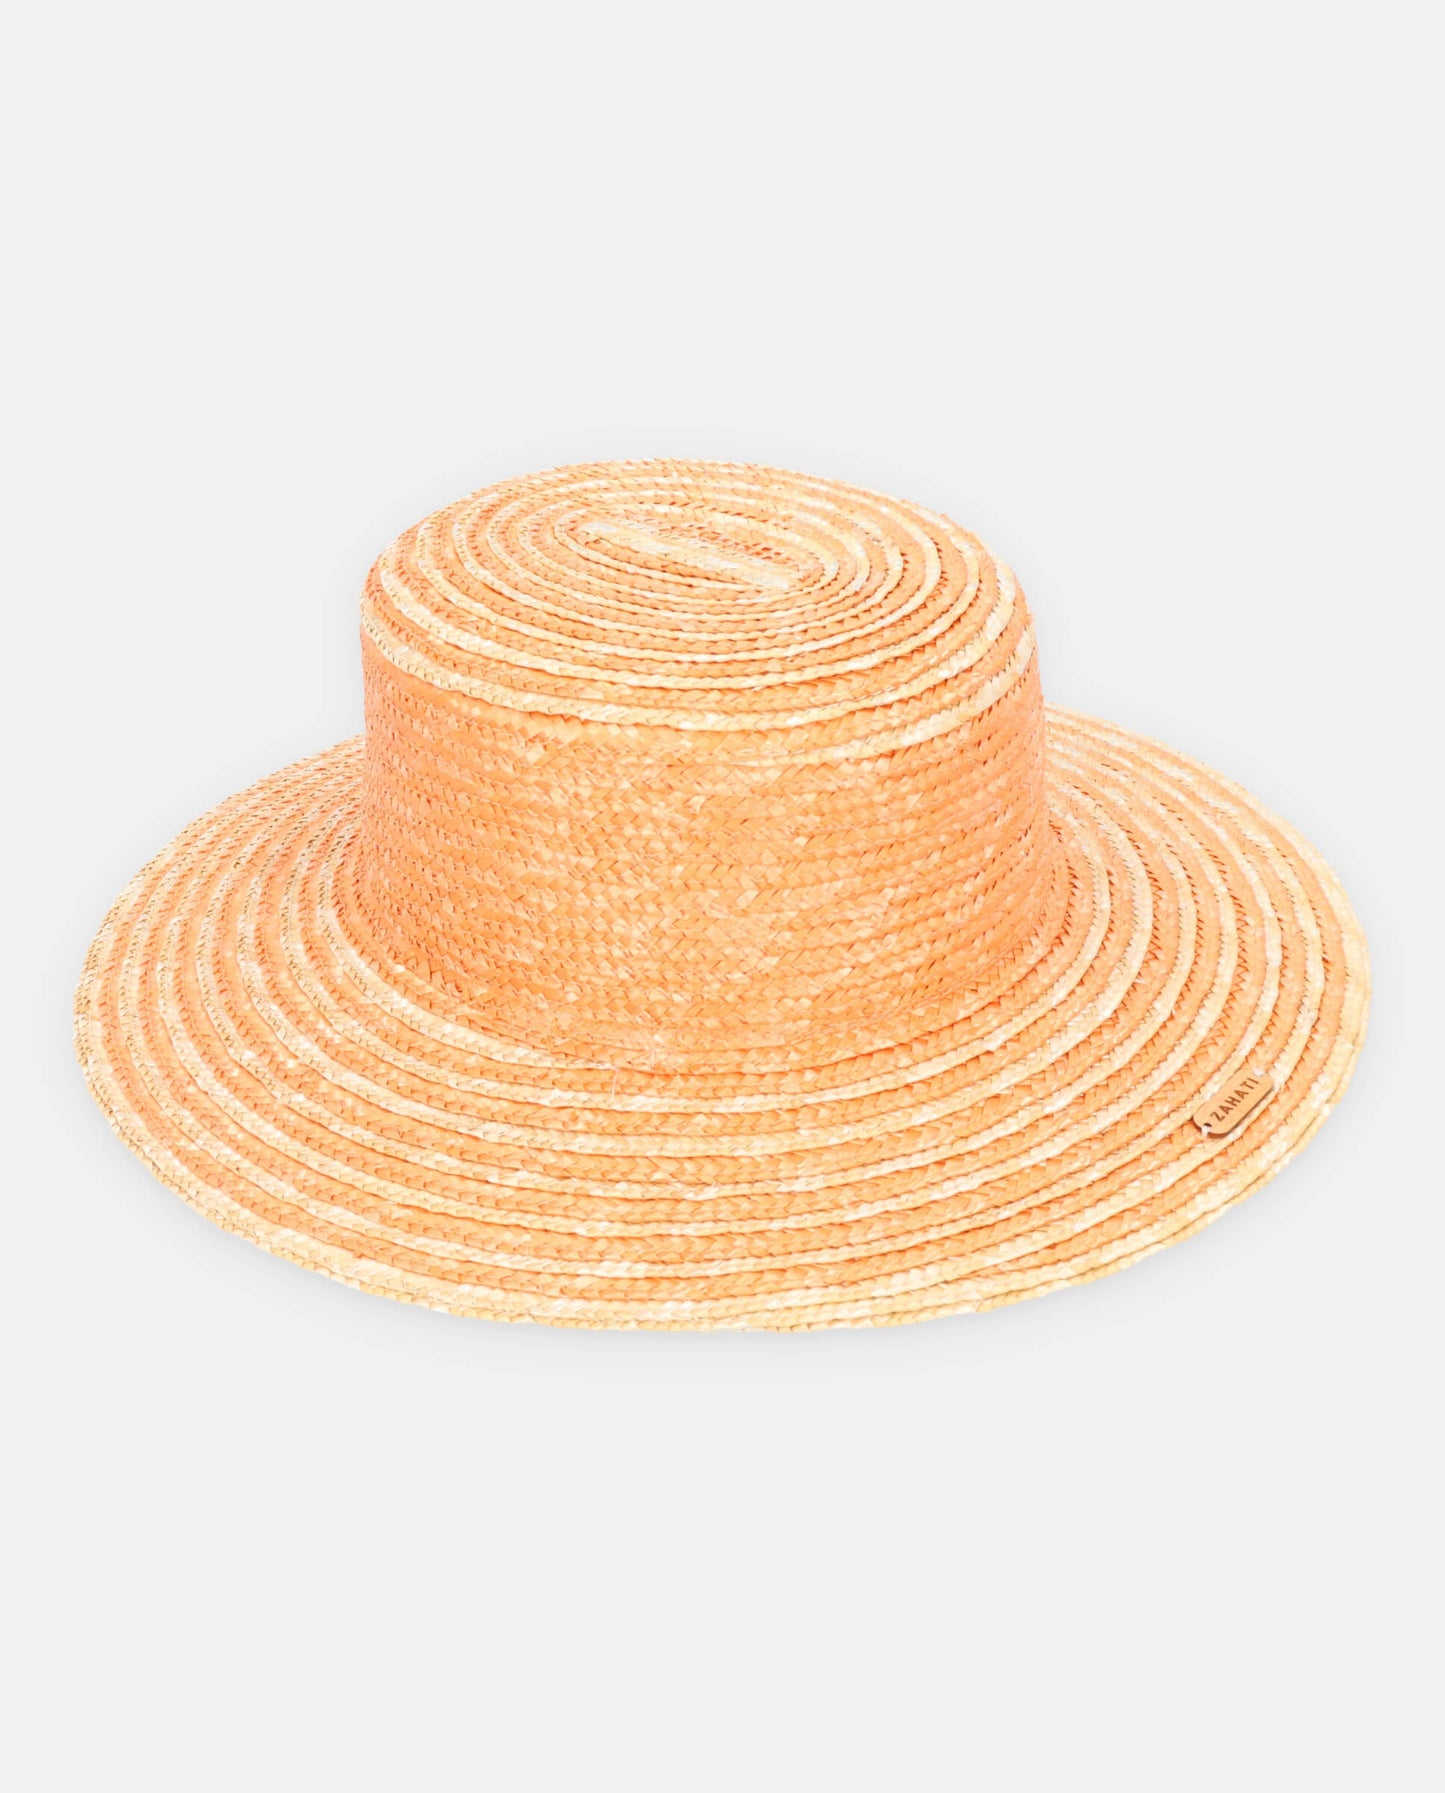 Orange-natural spiral Cuchi hat S brim